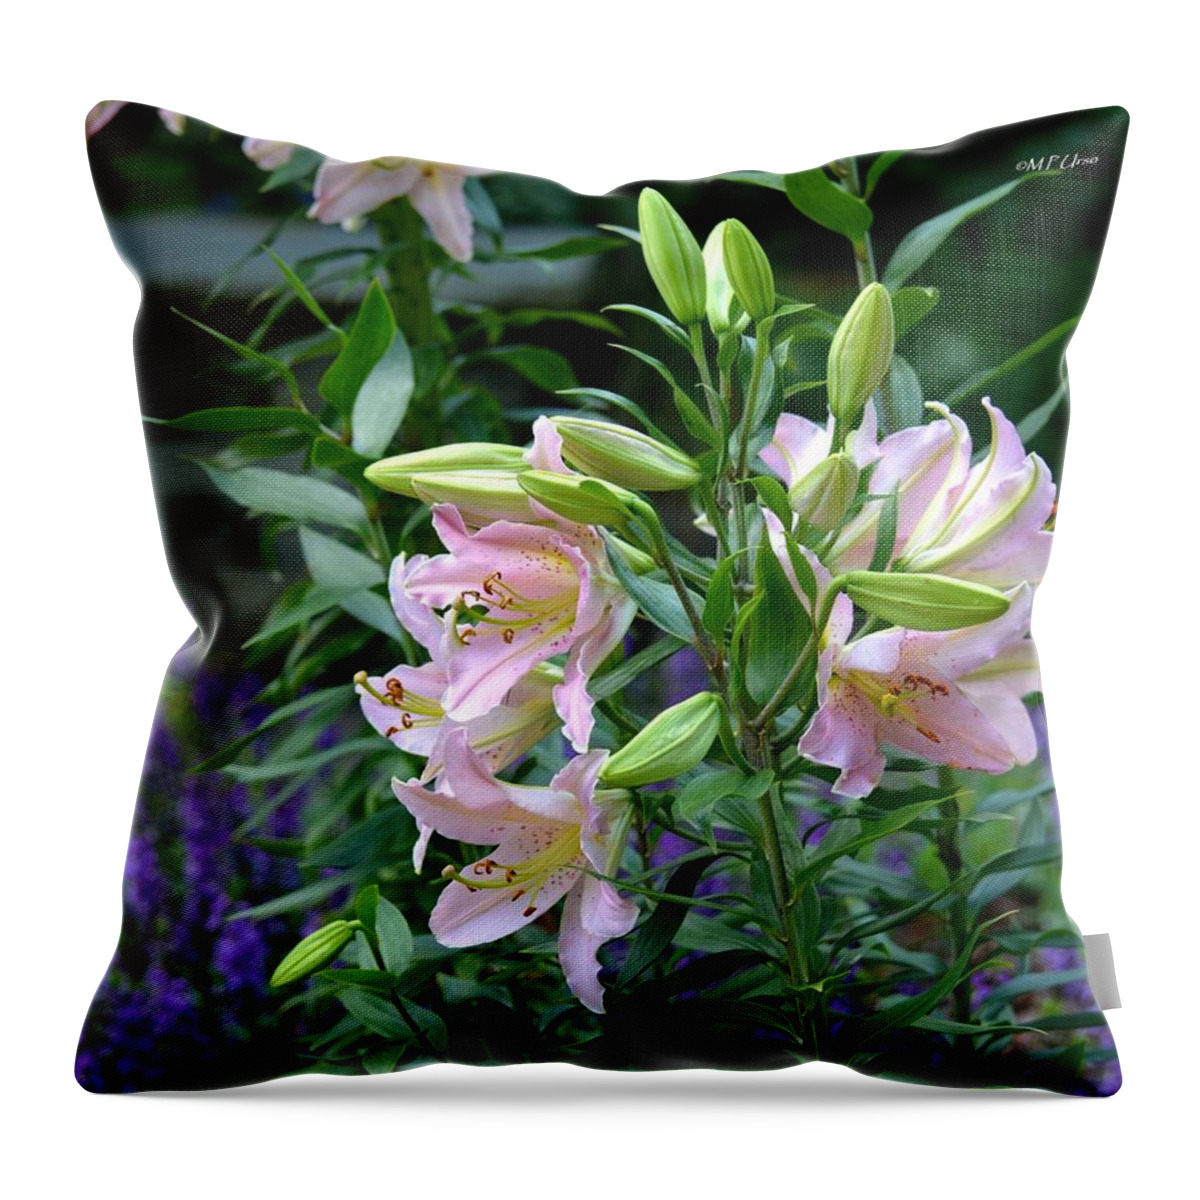 Garden Pink Lilies Throw Pillow featuring the photograph Garden Pink Lilies by Maria Urso